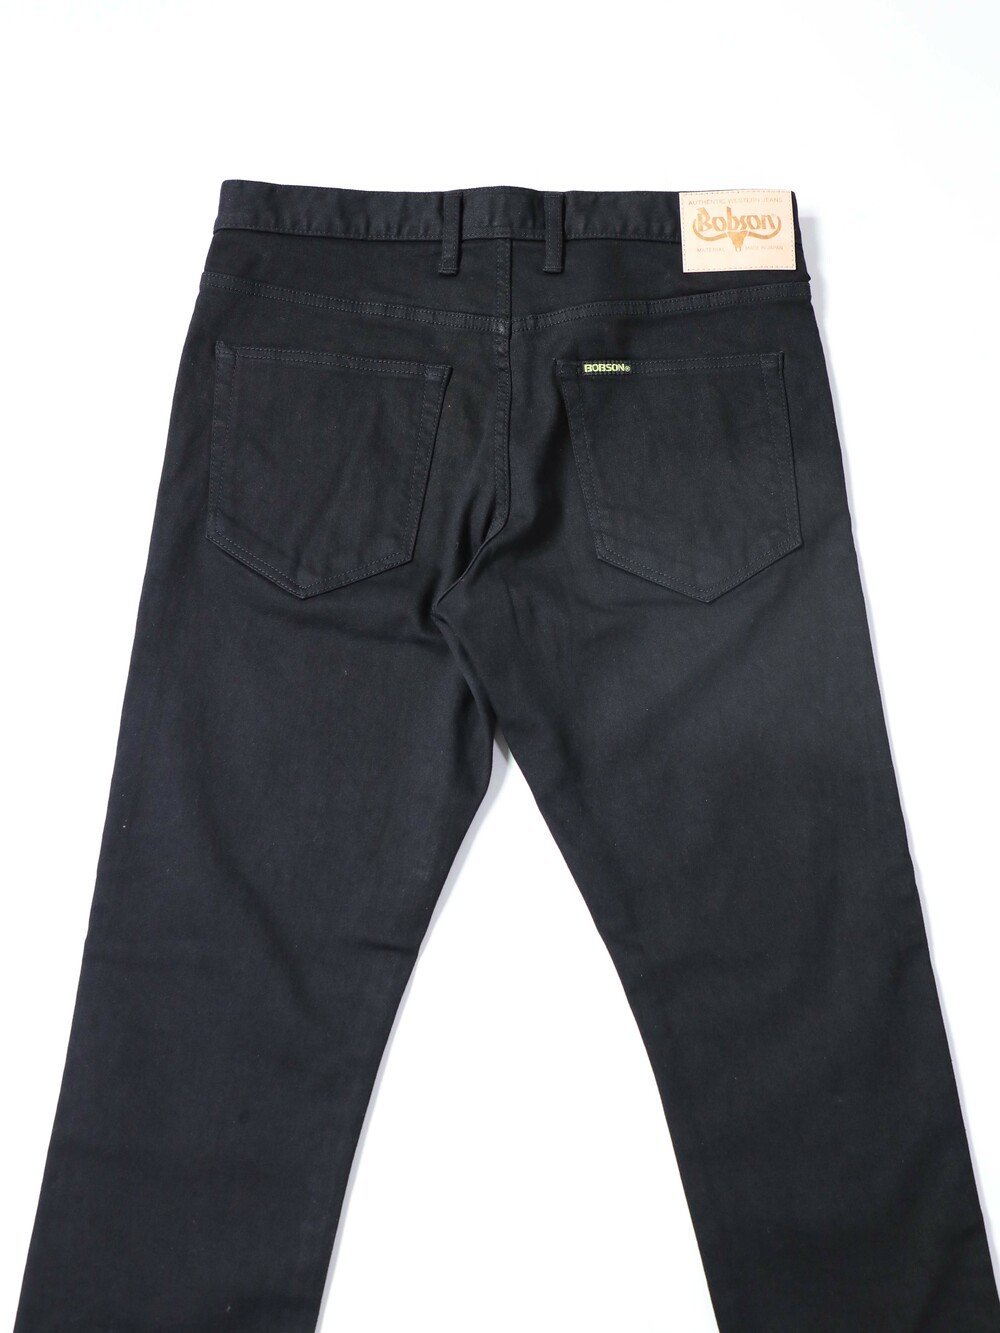 Power Stretch Black Skinny Jeans/Men's